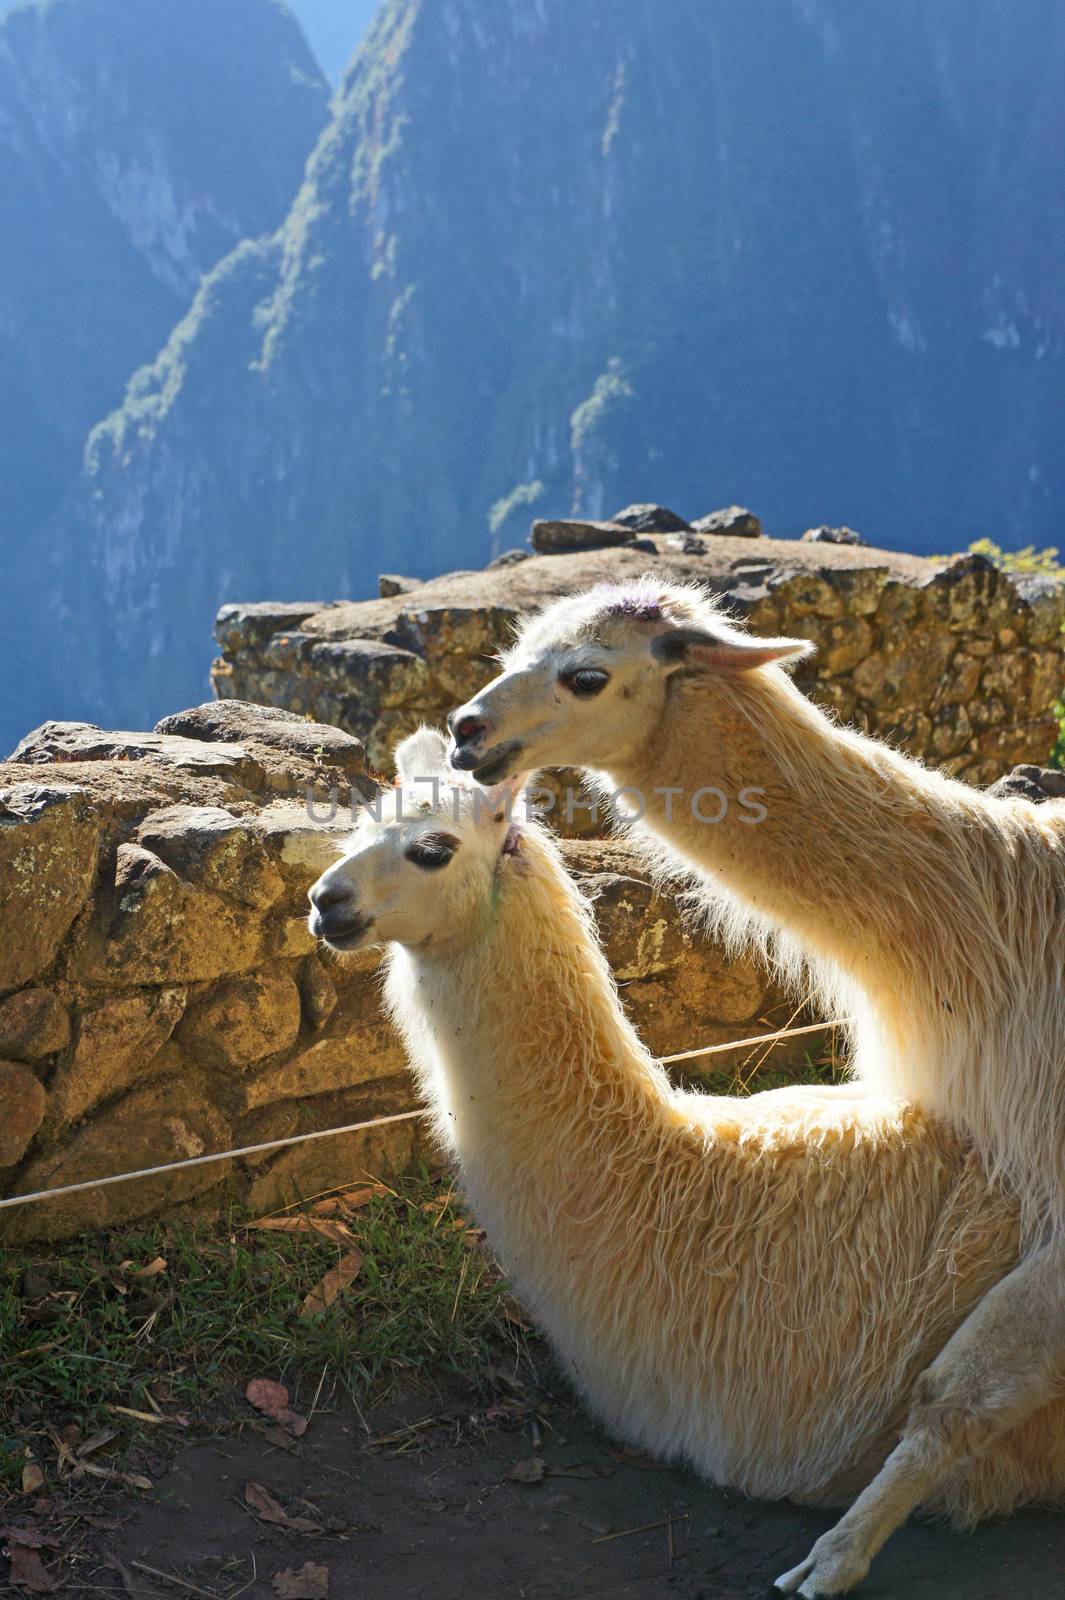 Llamas at Machu Picchu by Suchan